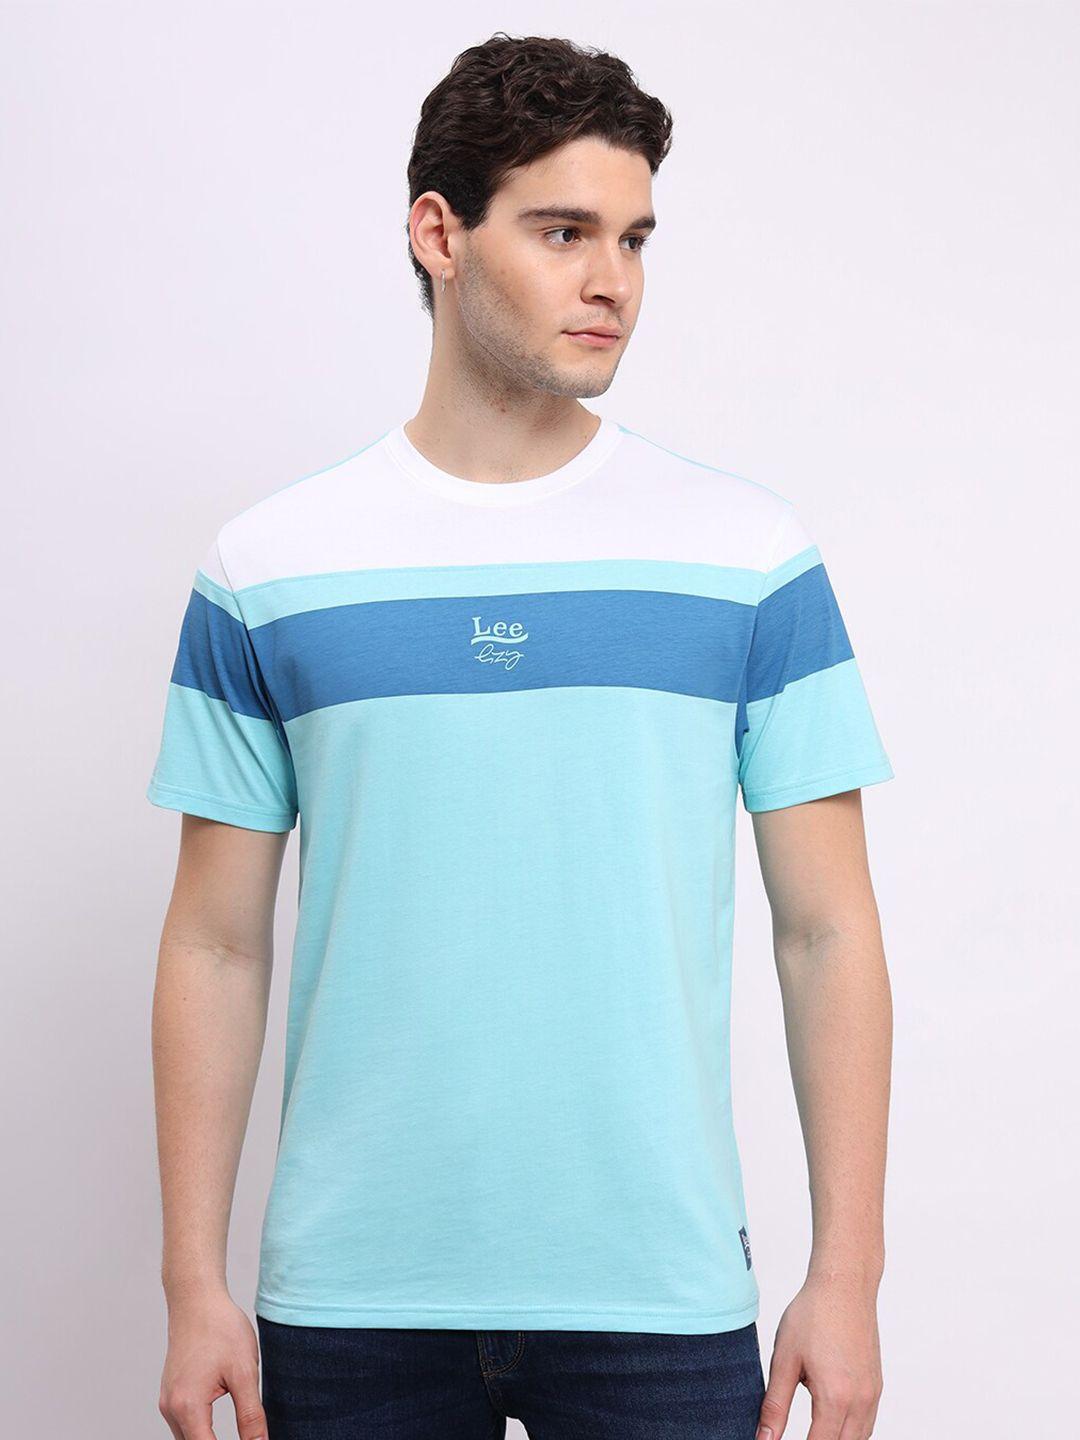 lee striped comfort fit cotton t-shirt